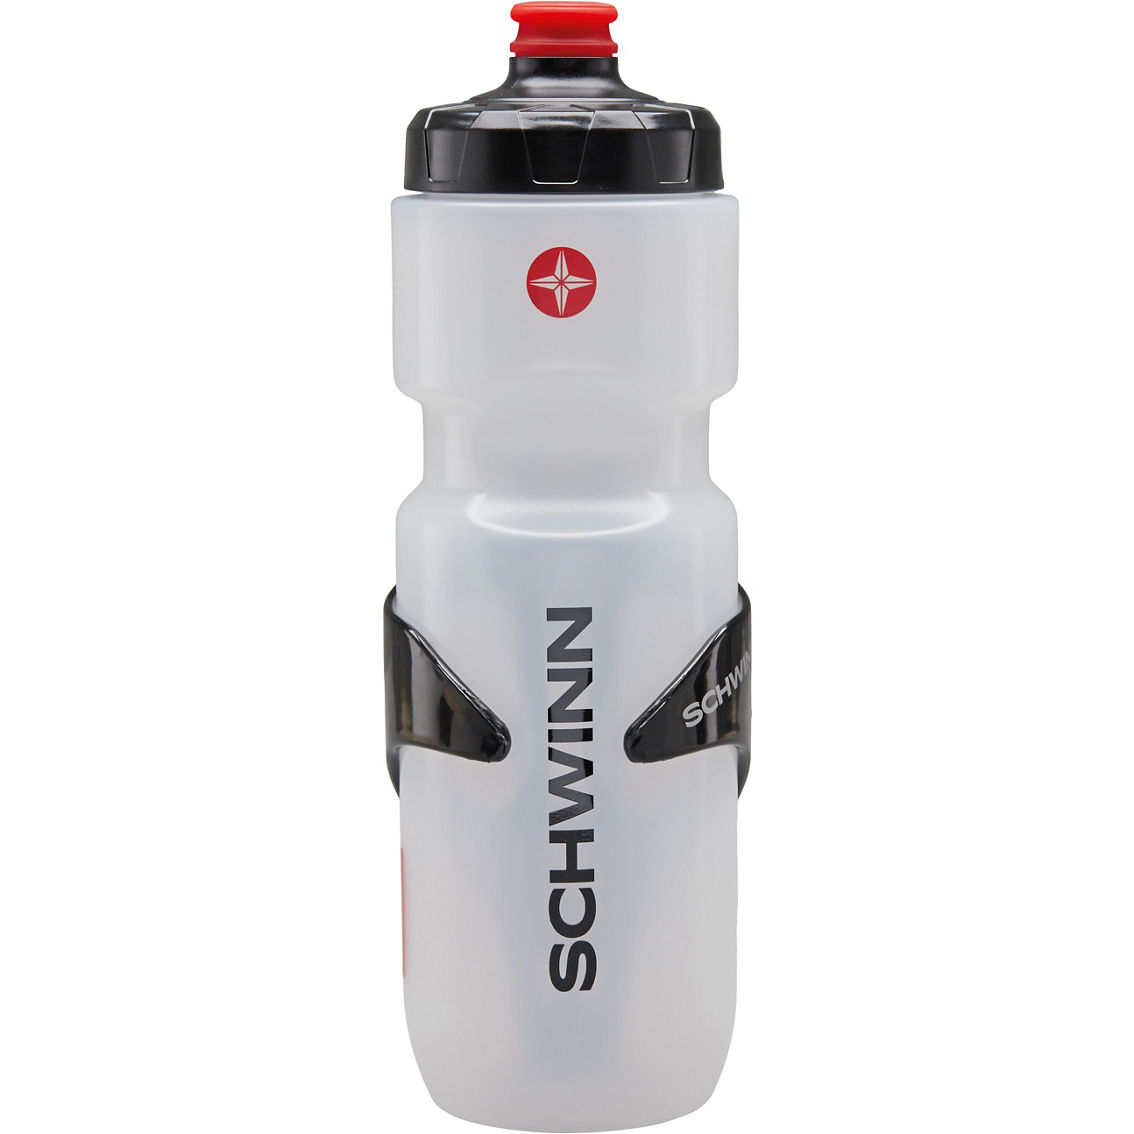 Schwinn Sport 26 oz. Water Bottle with Cage - Image 4 of 6